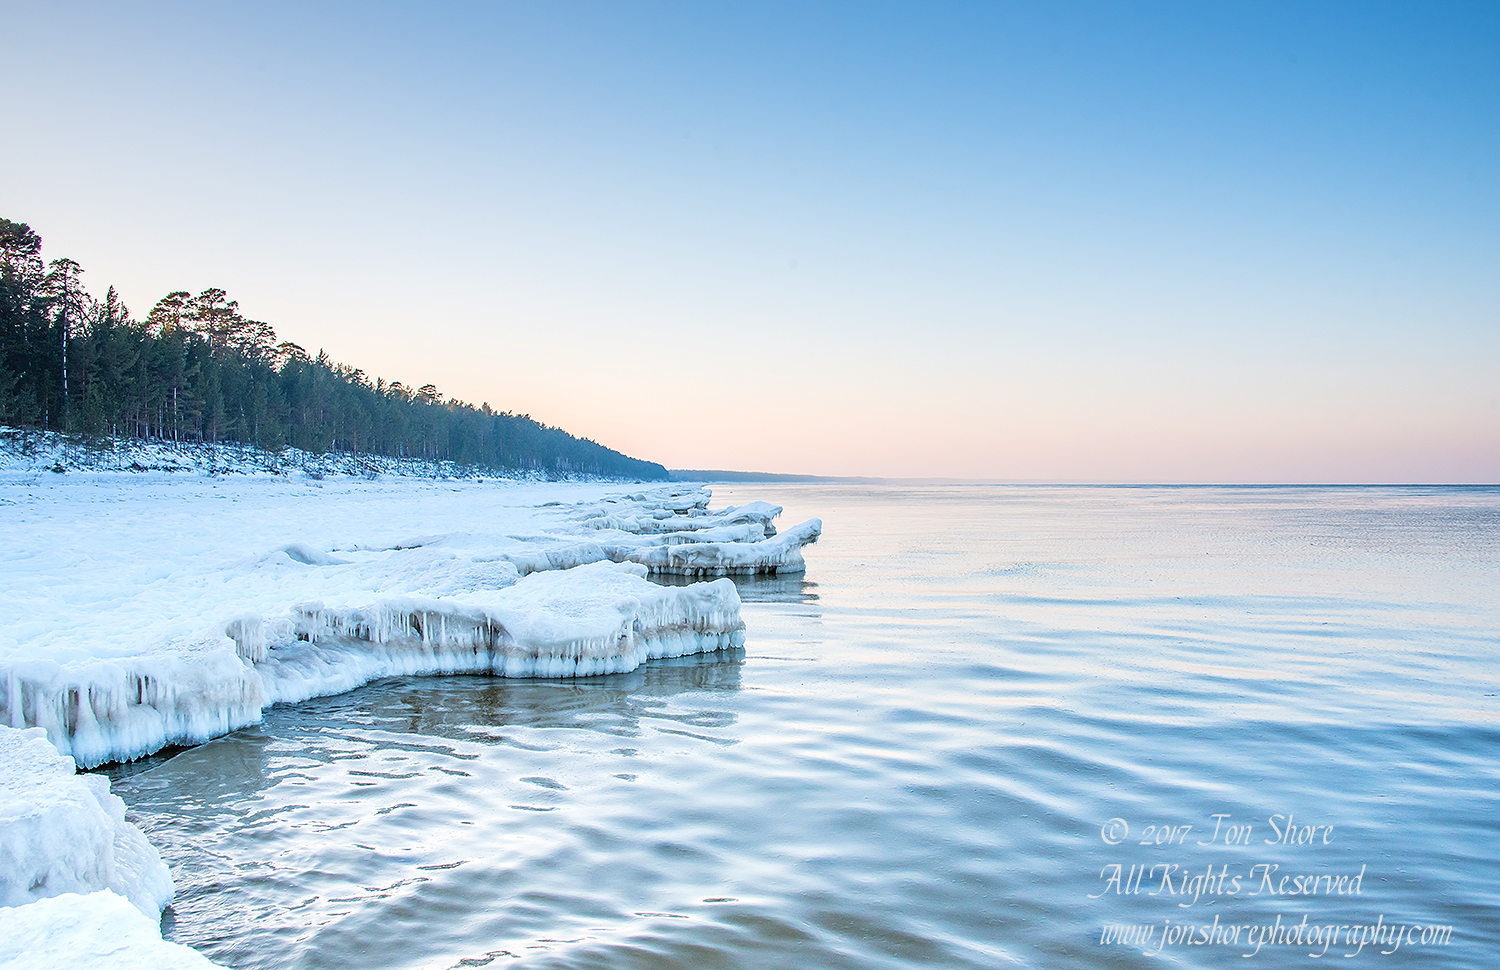 Winter at a Frozen Baltic Sea Beach. Nikkor 28mm